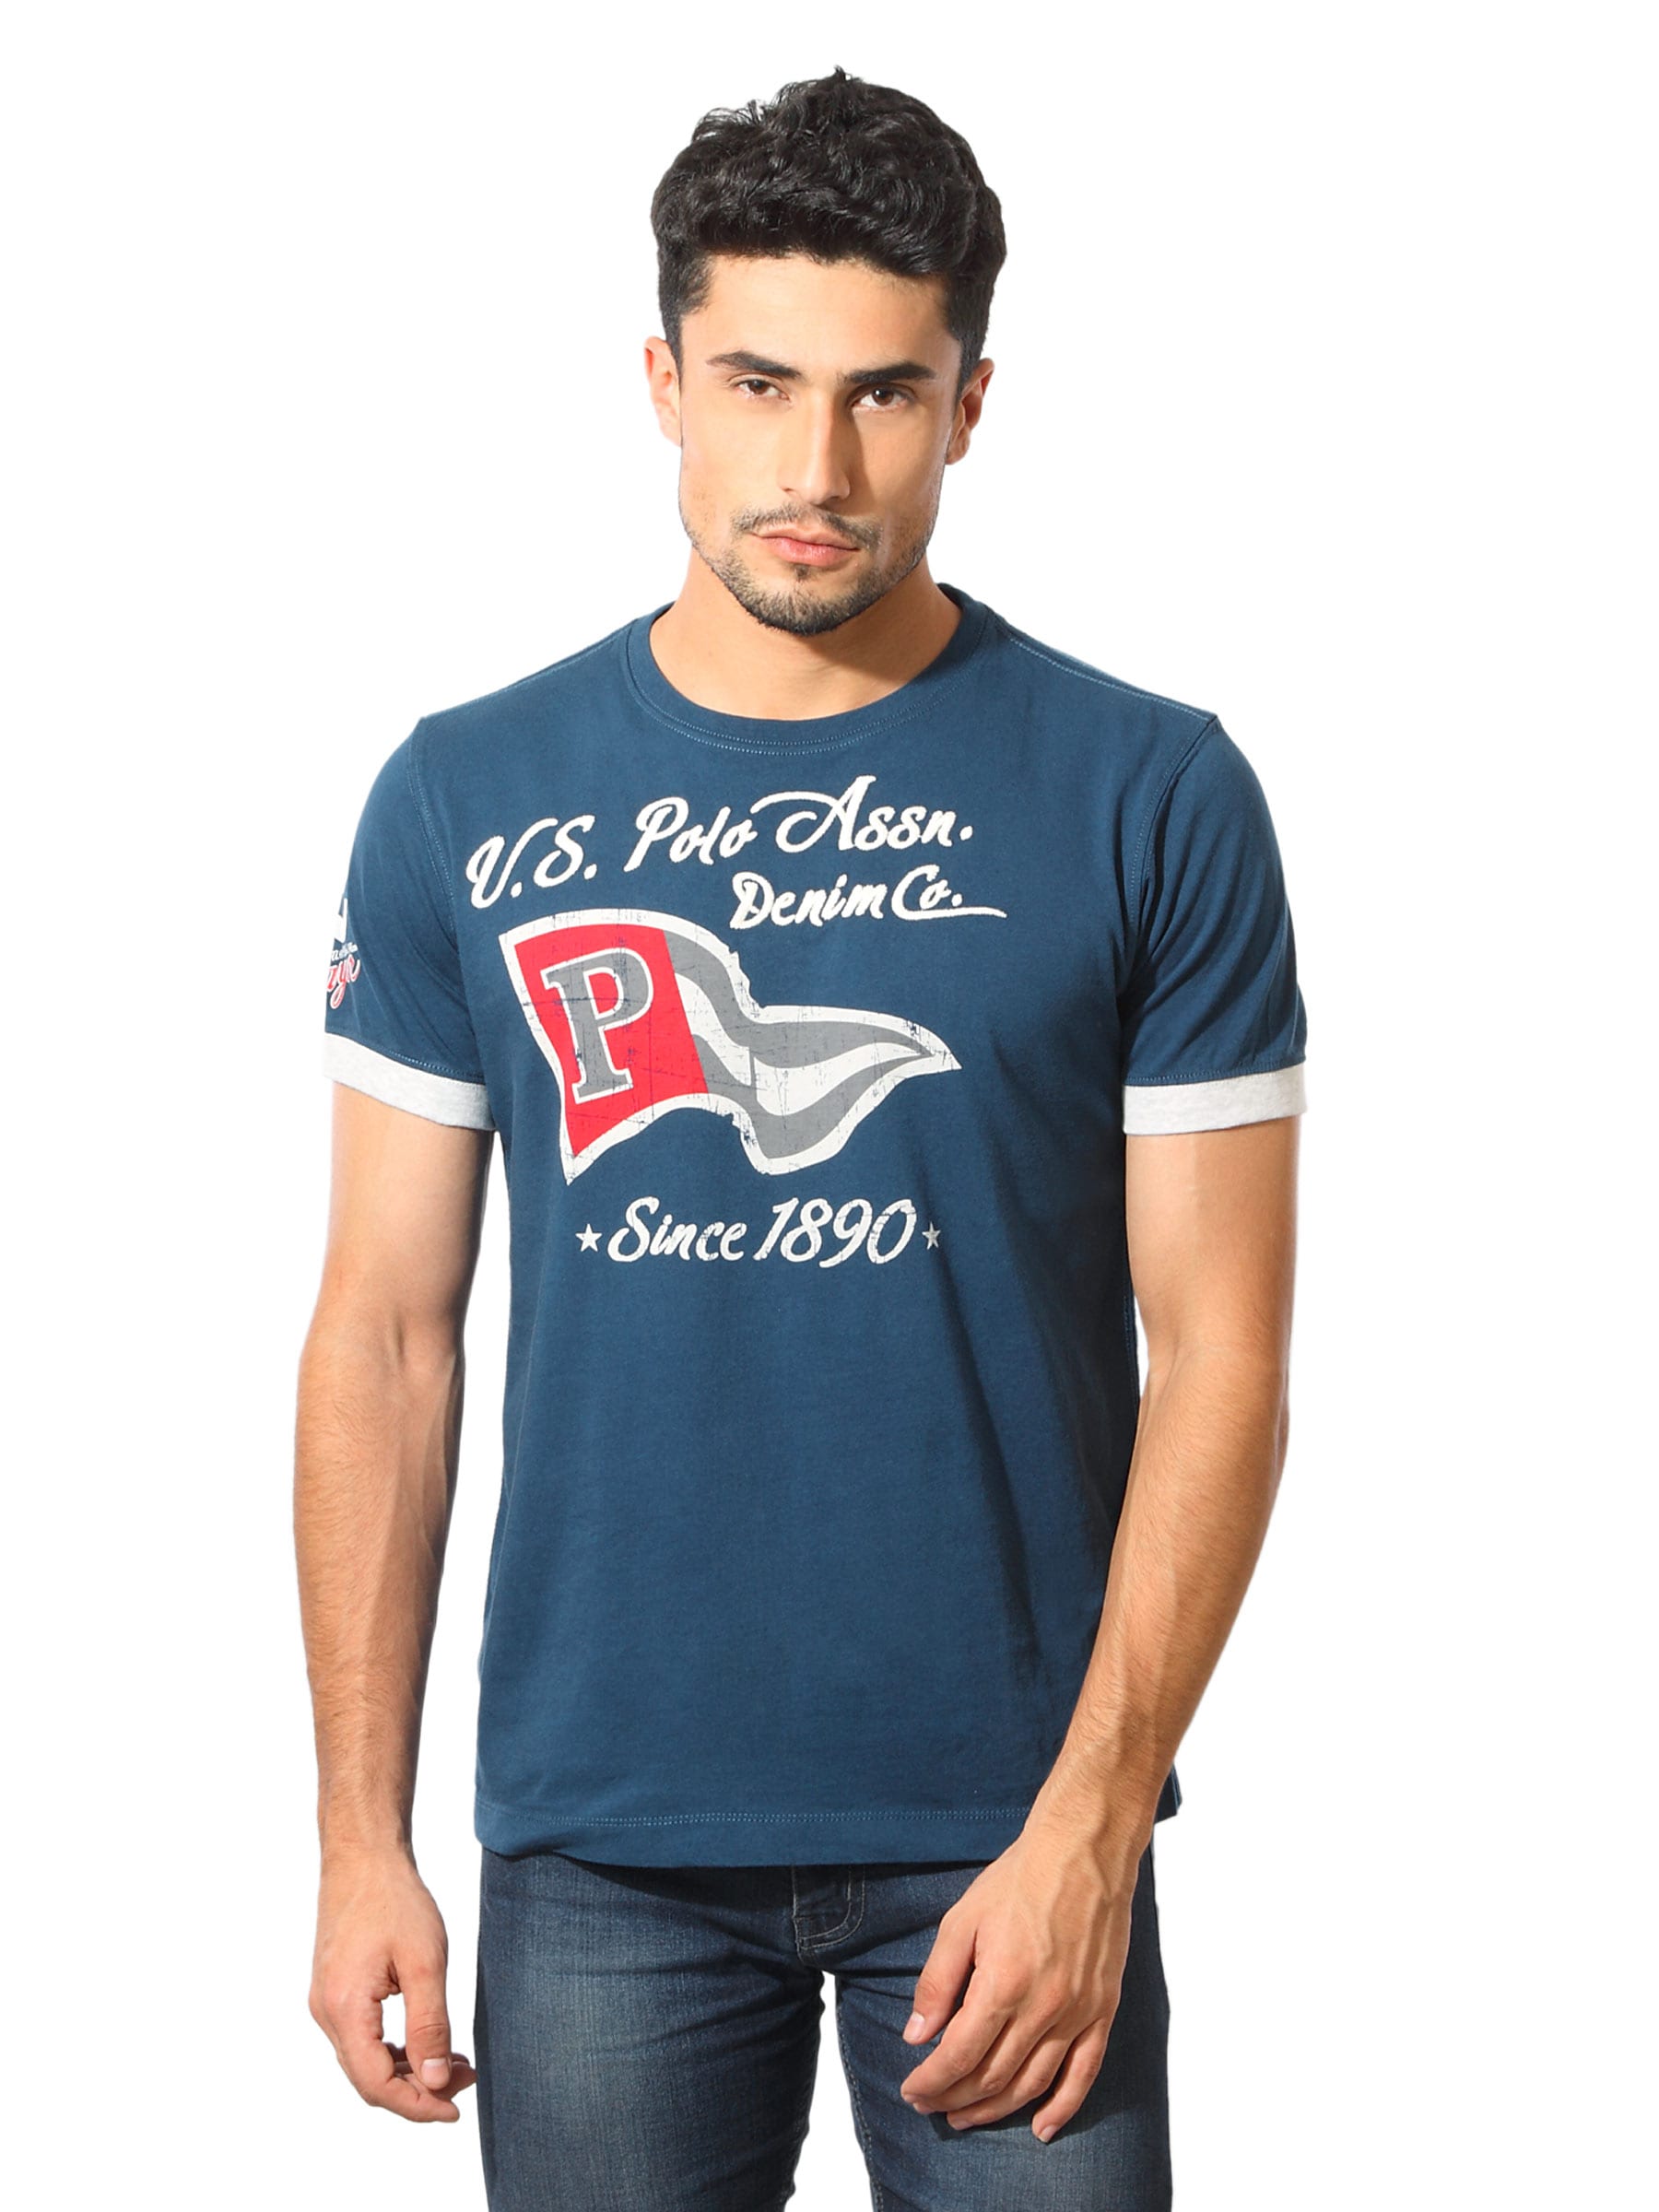 U.S. Polo Assn. Denim Co. Men Printed Navy Blue T-Shirt